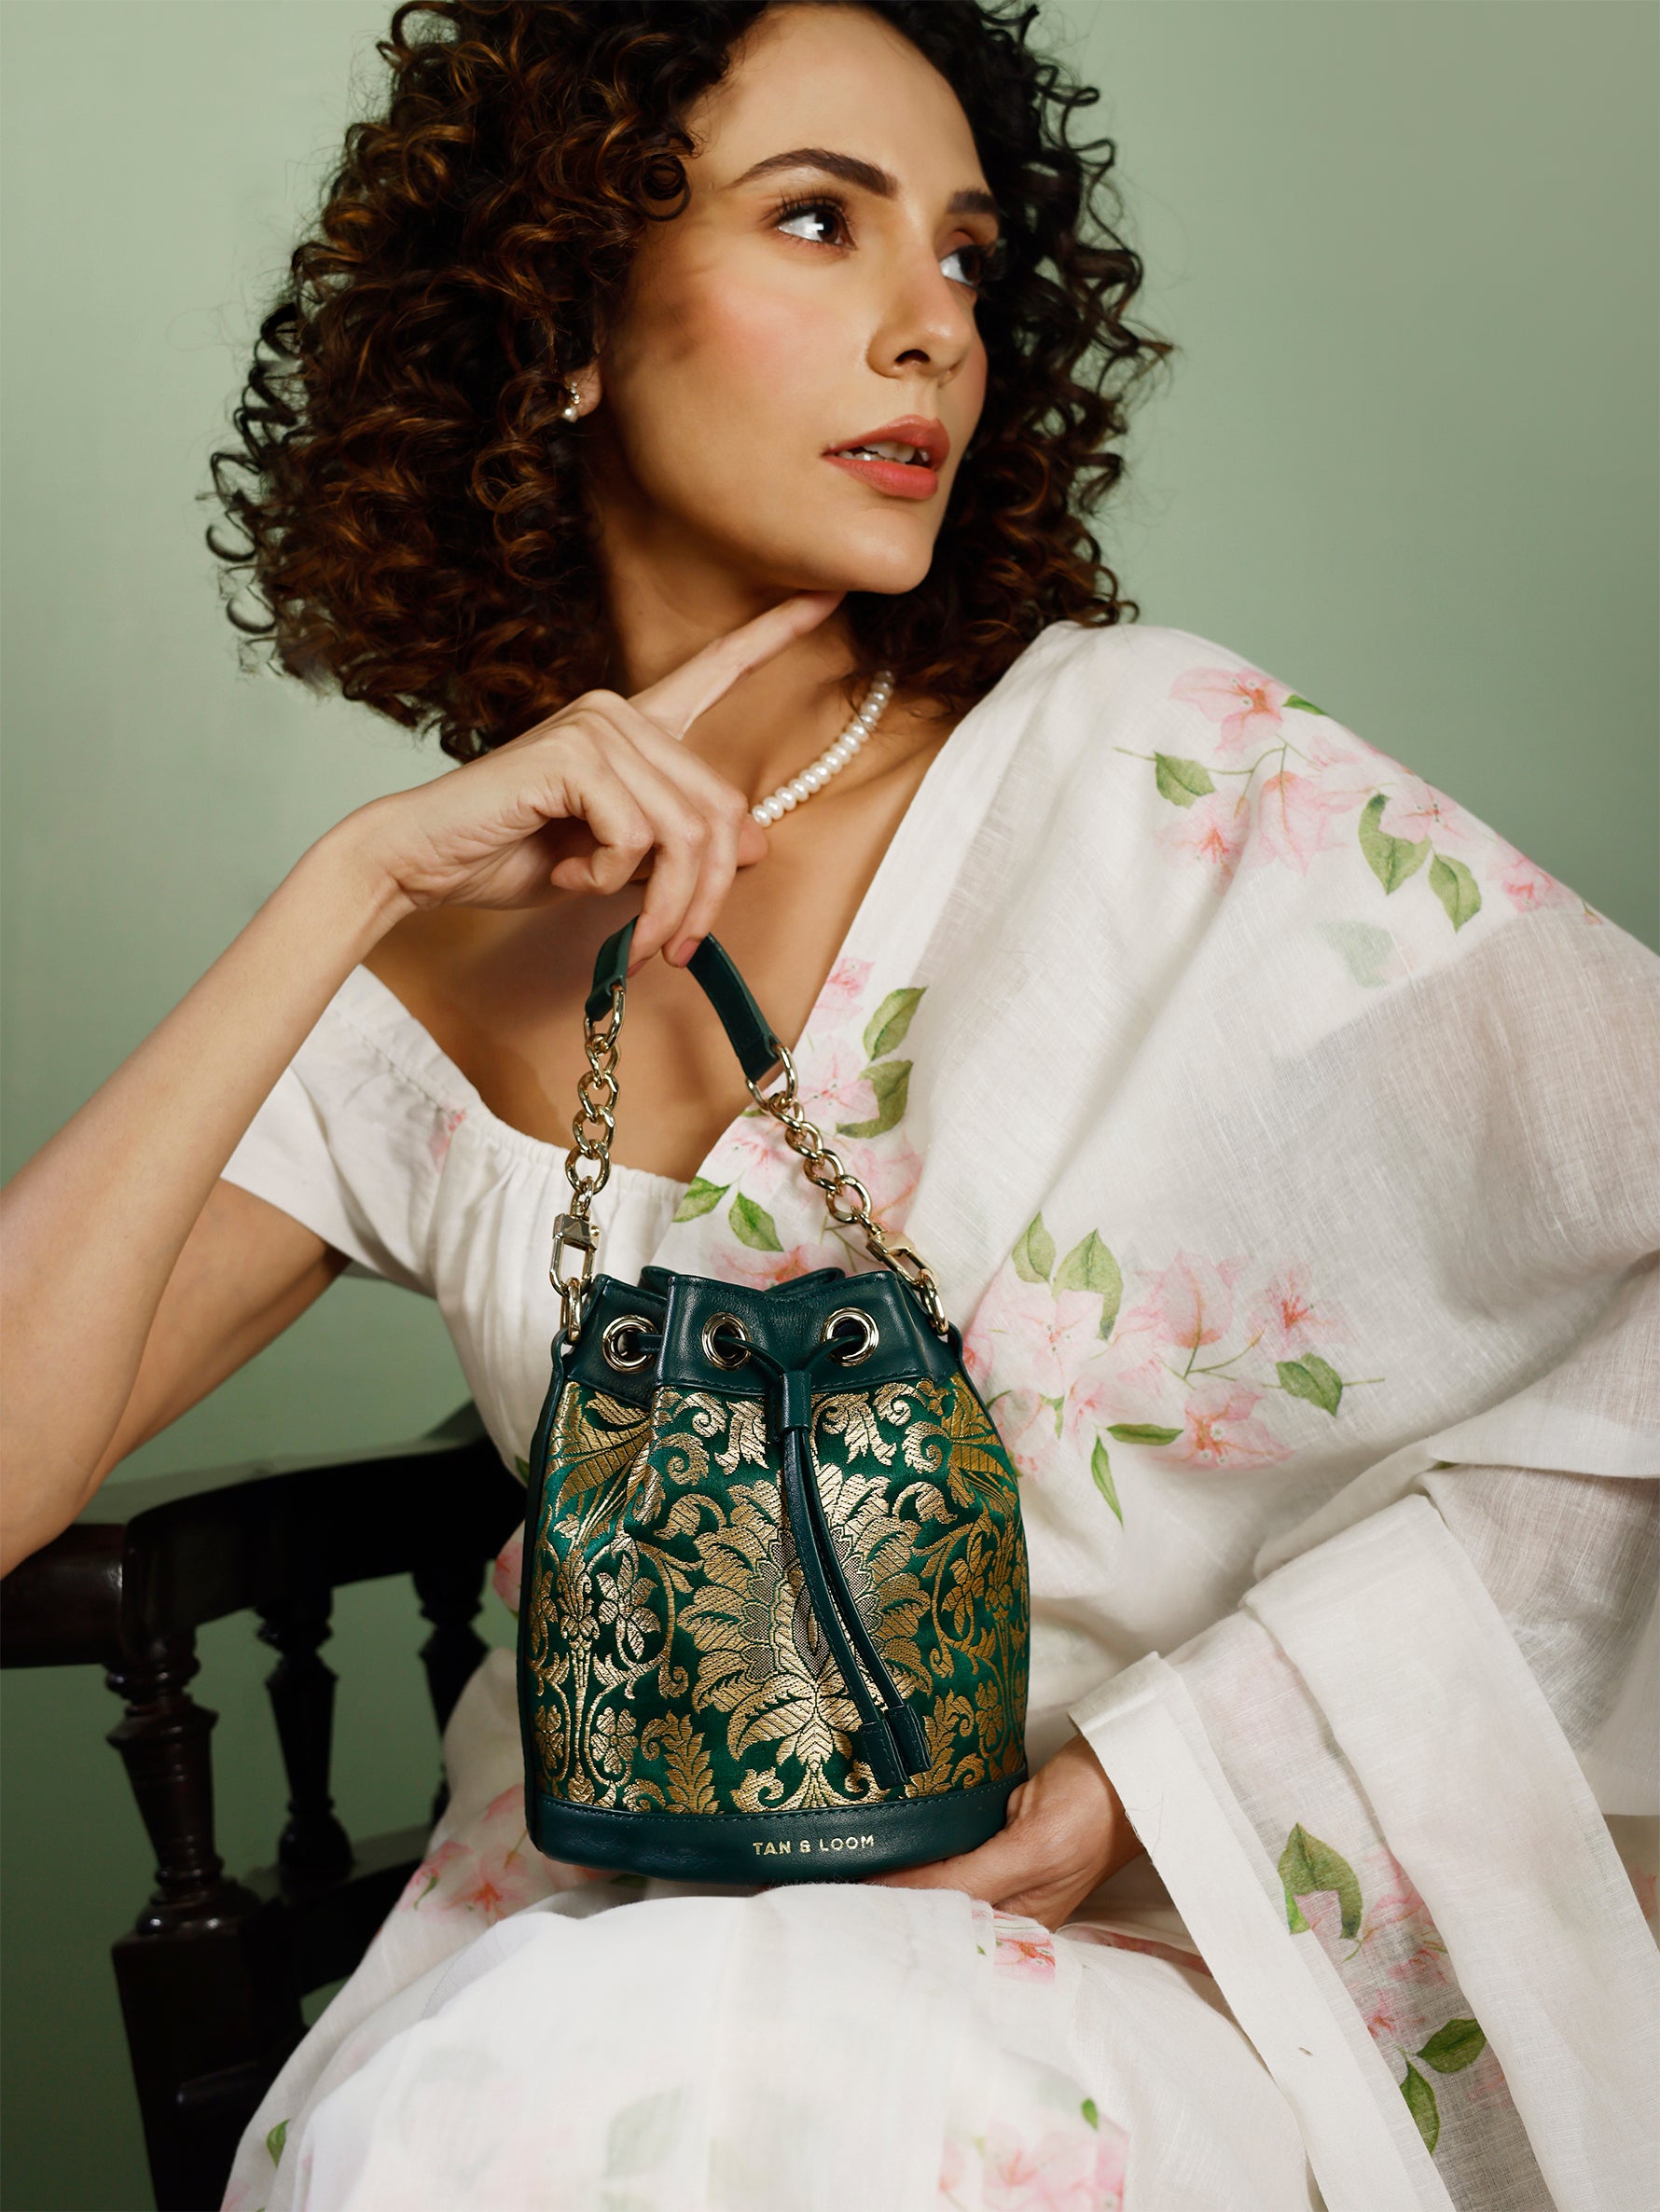 Handcrafted Forrest Green Genuine Leather & Banarasi Brocade Bucket Potli Bag for Women Tan & Loom